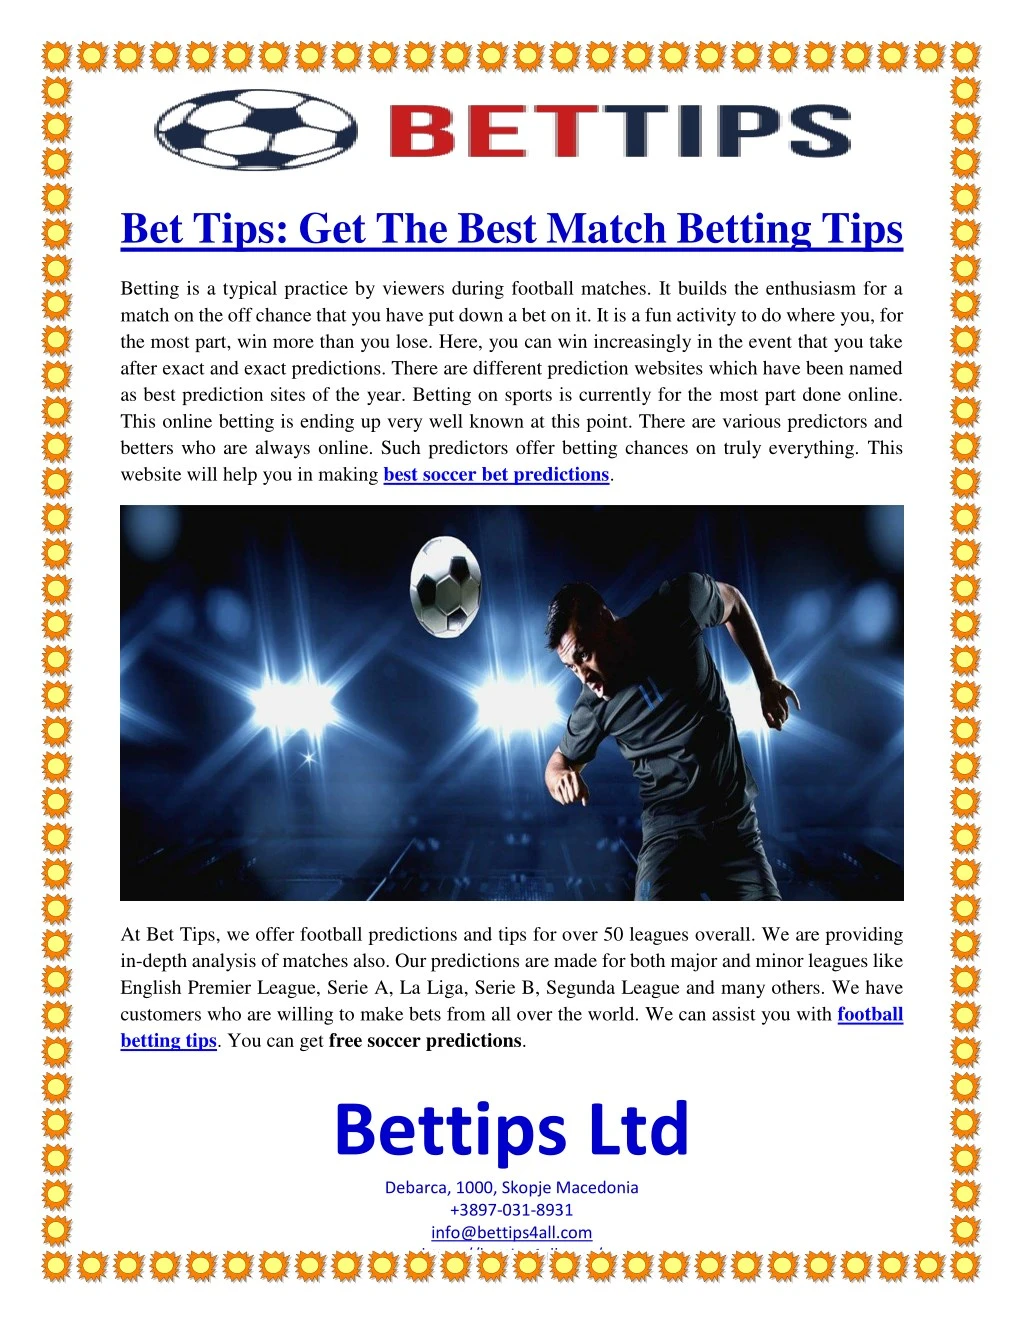 bet tips get the best match betting tips